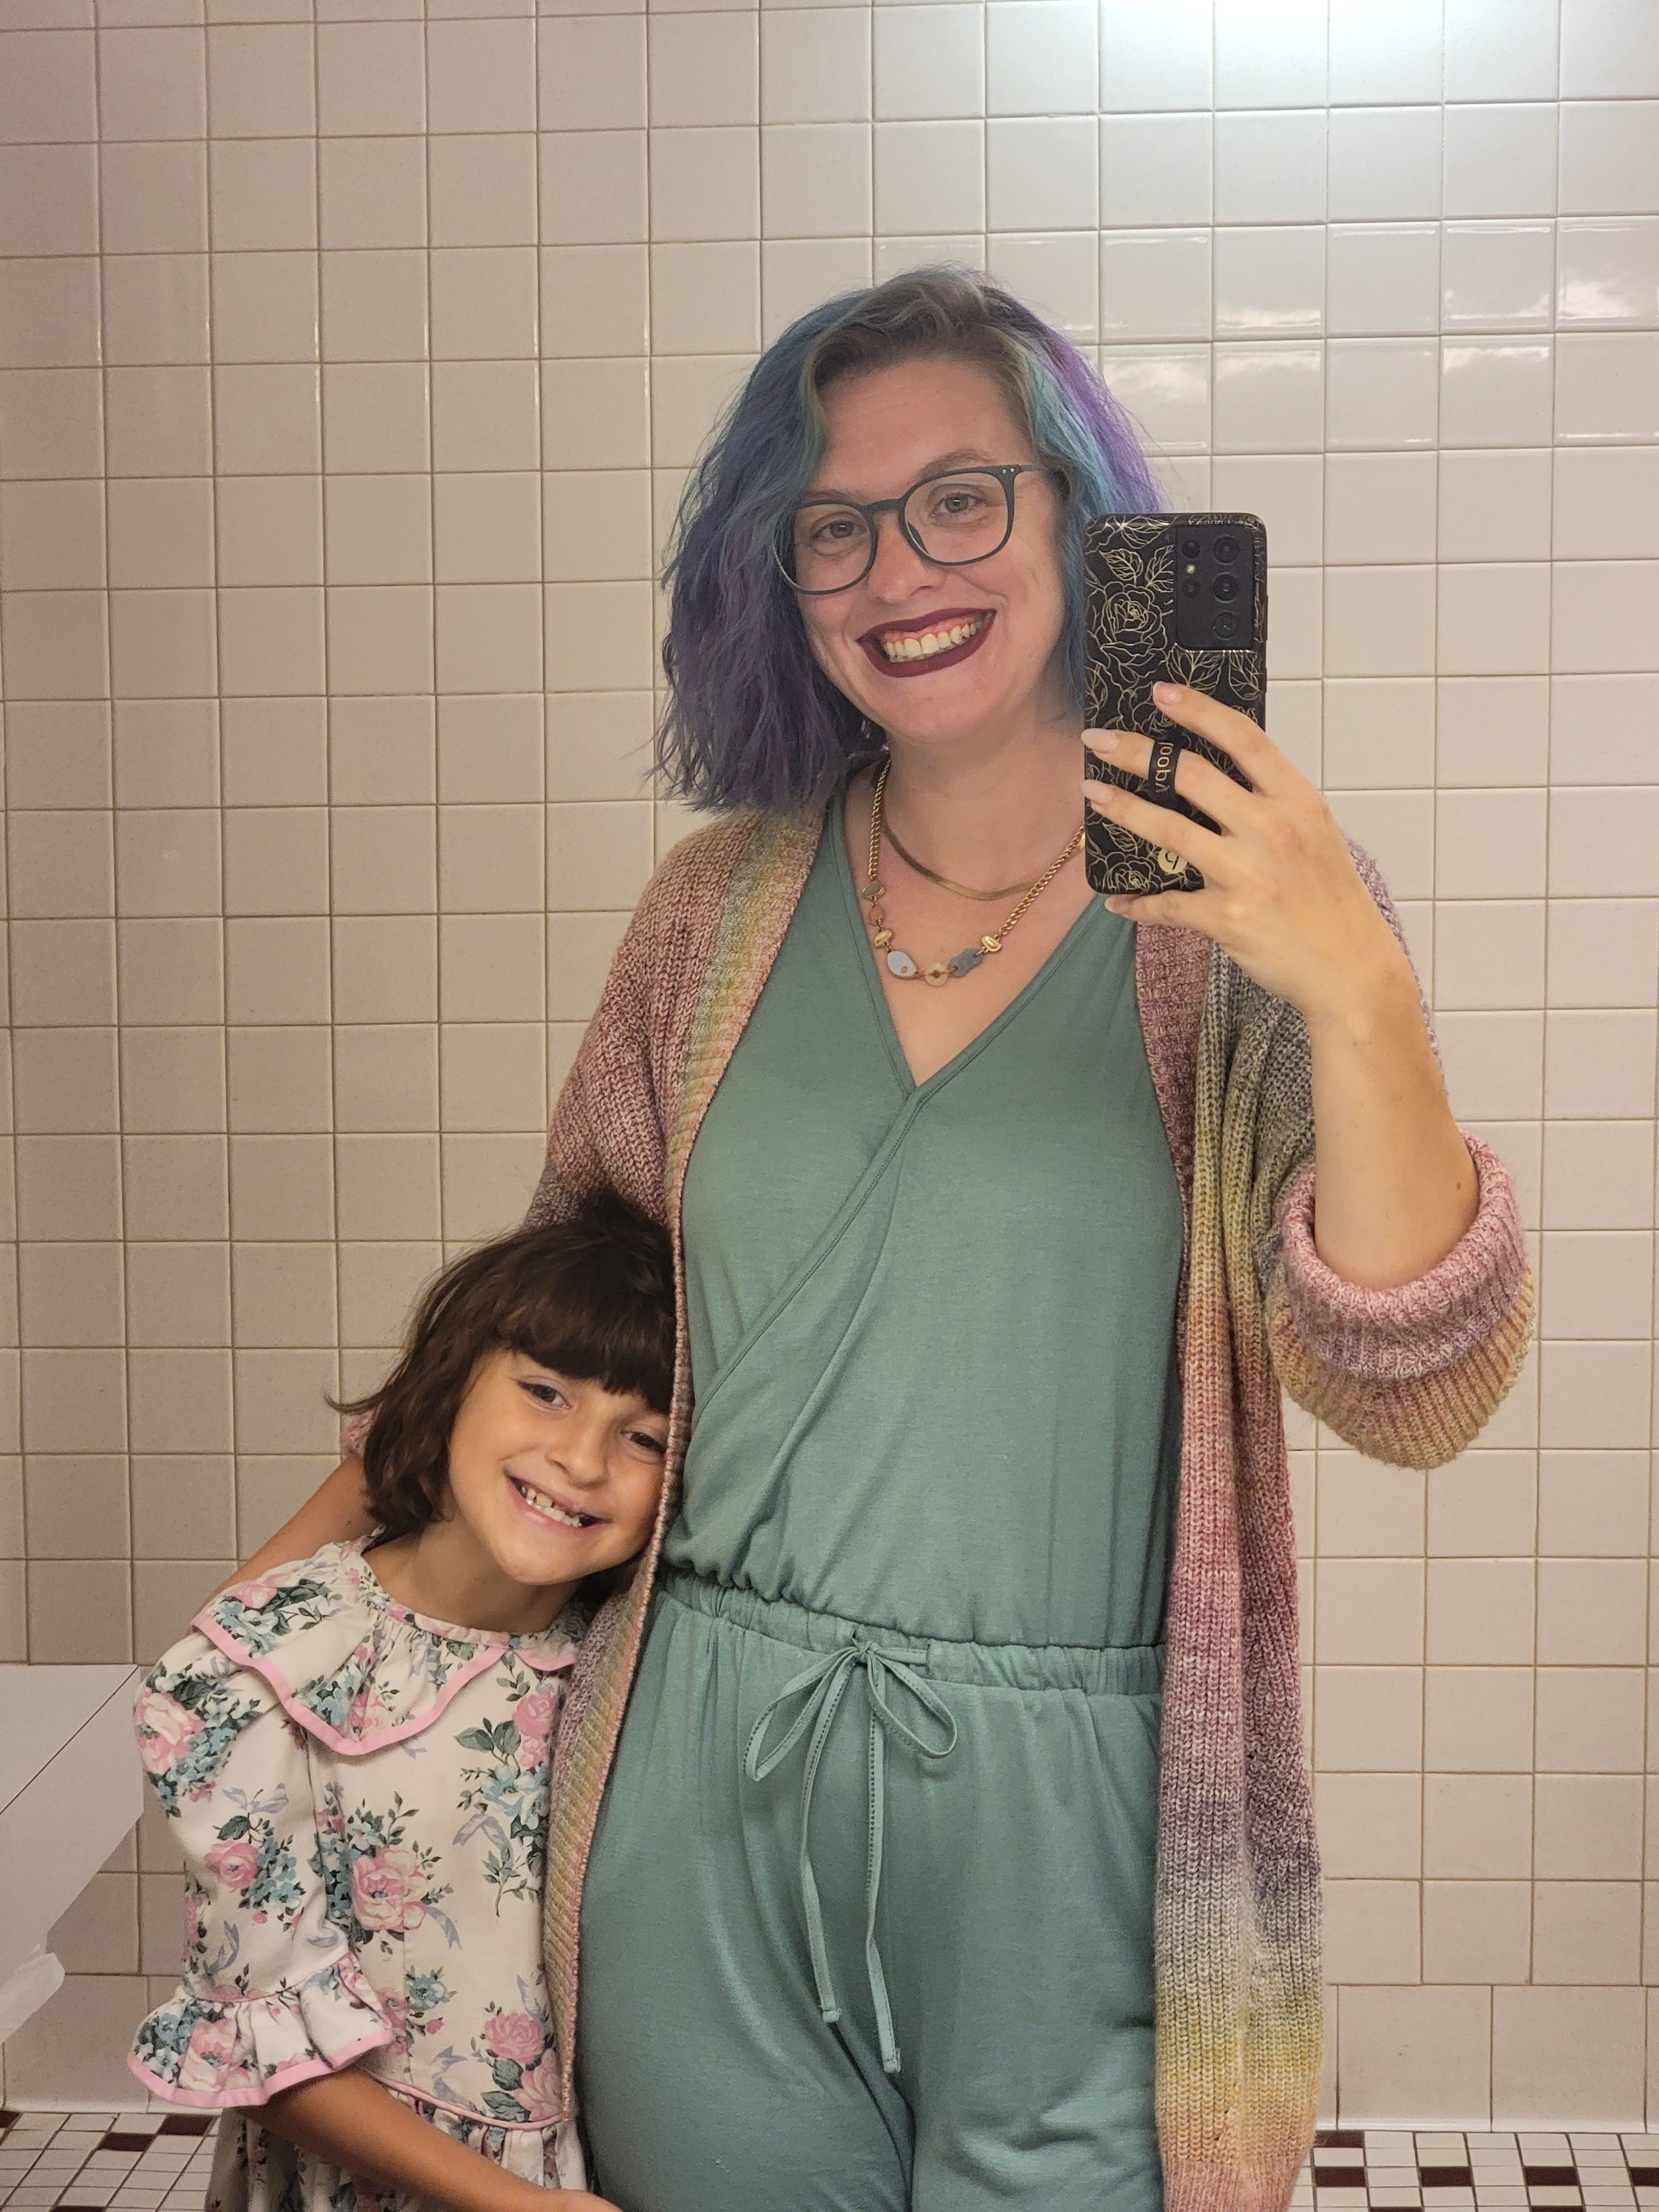 Brianna taking a mirror selfie with one of her children